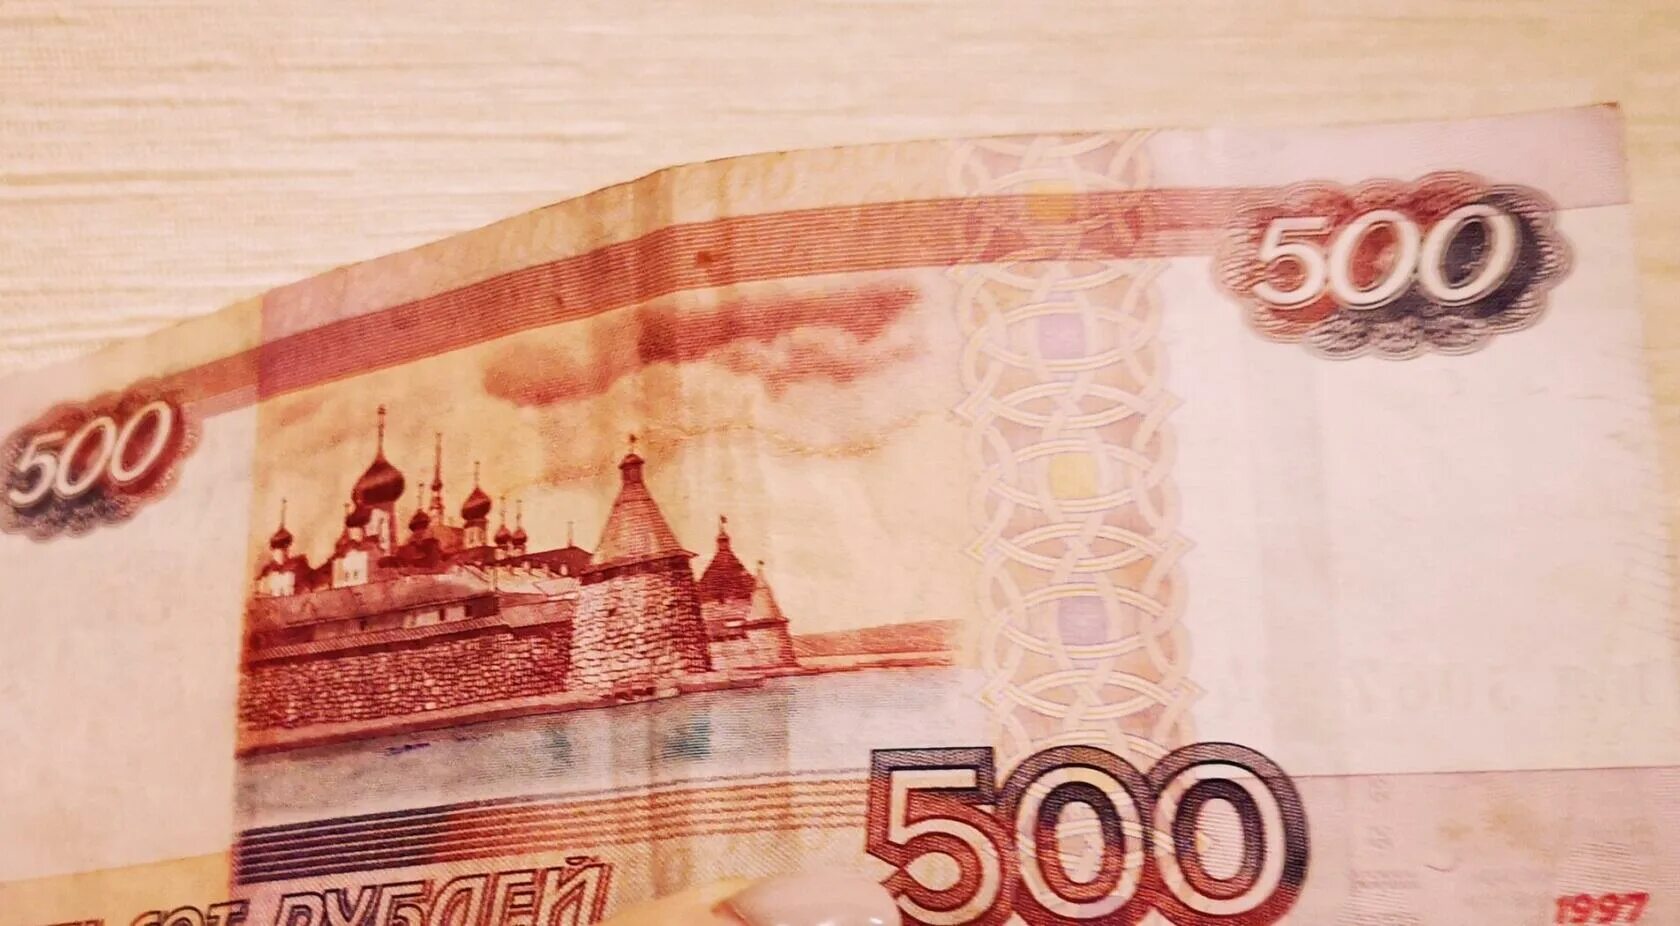 Про 500 рублей. 500 Рублей картинка. Фотографию за 500 рублей. Фото с 500 рублевыми картинками для фона. Ретро 500 руб.